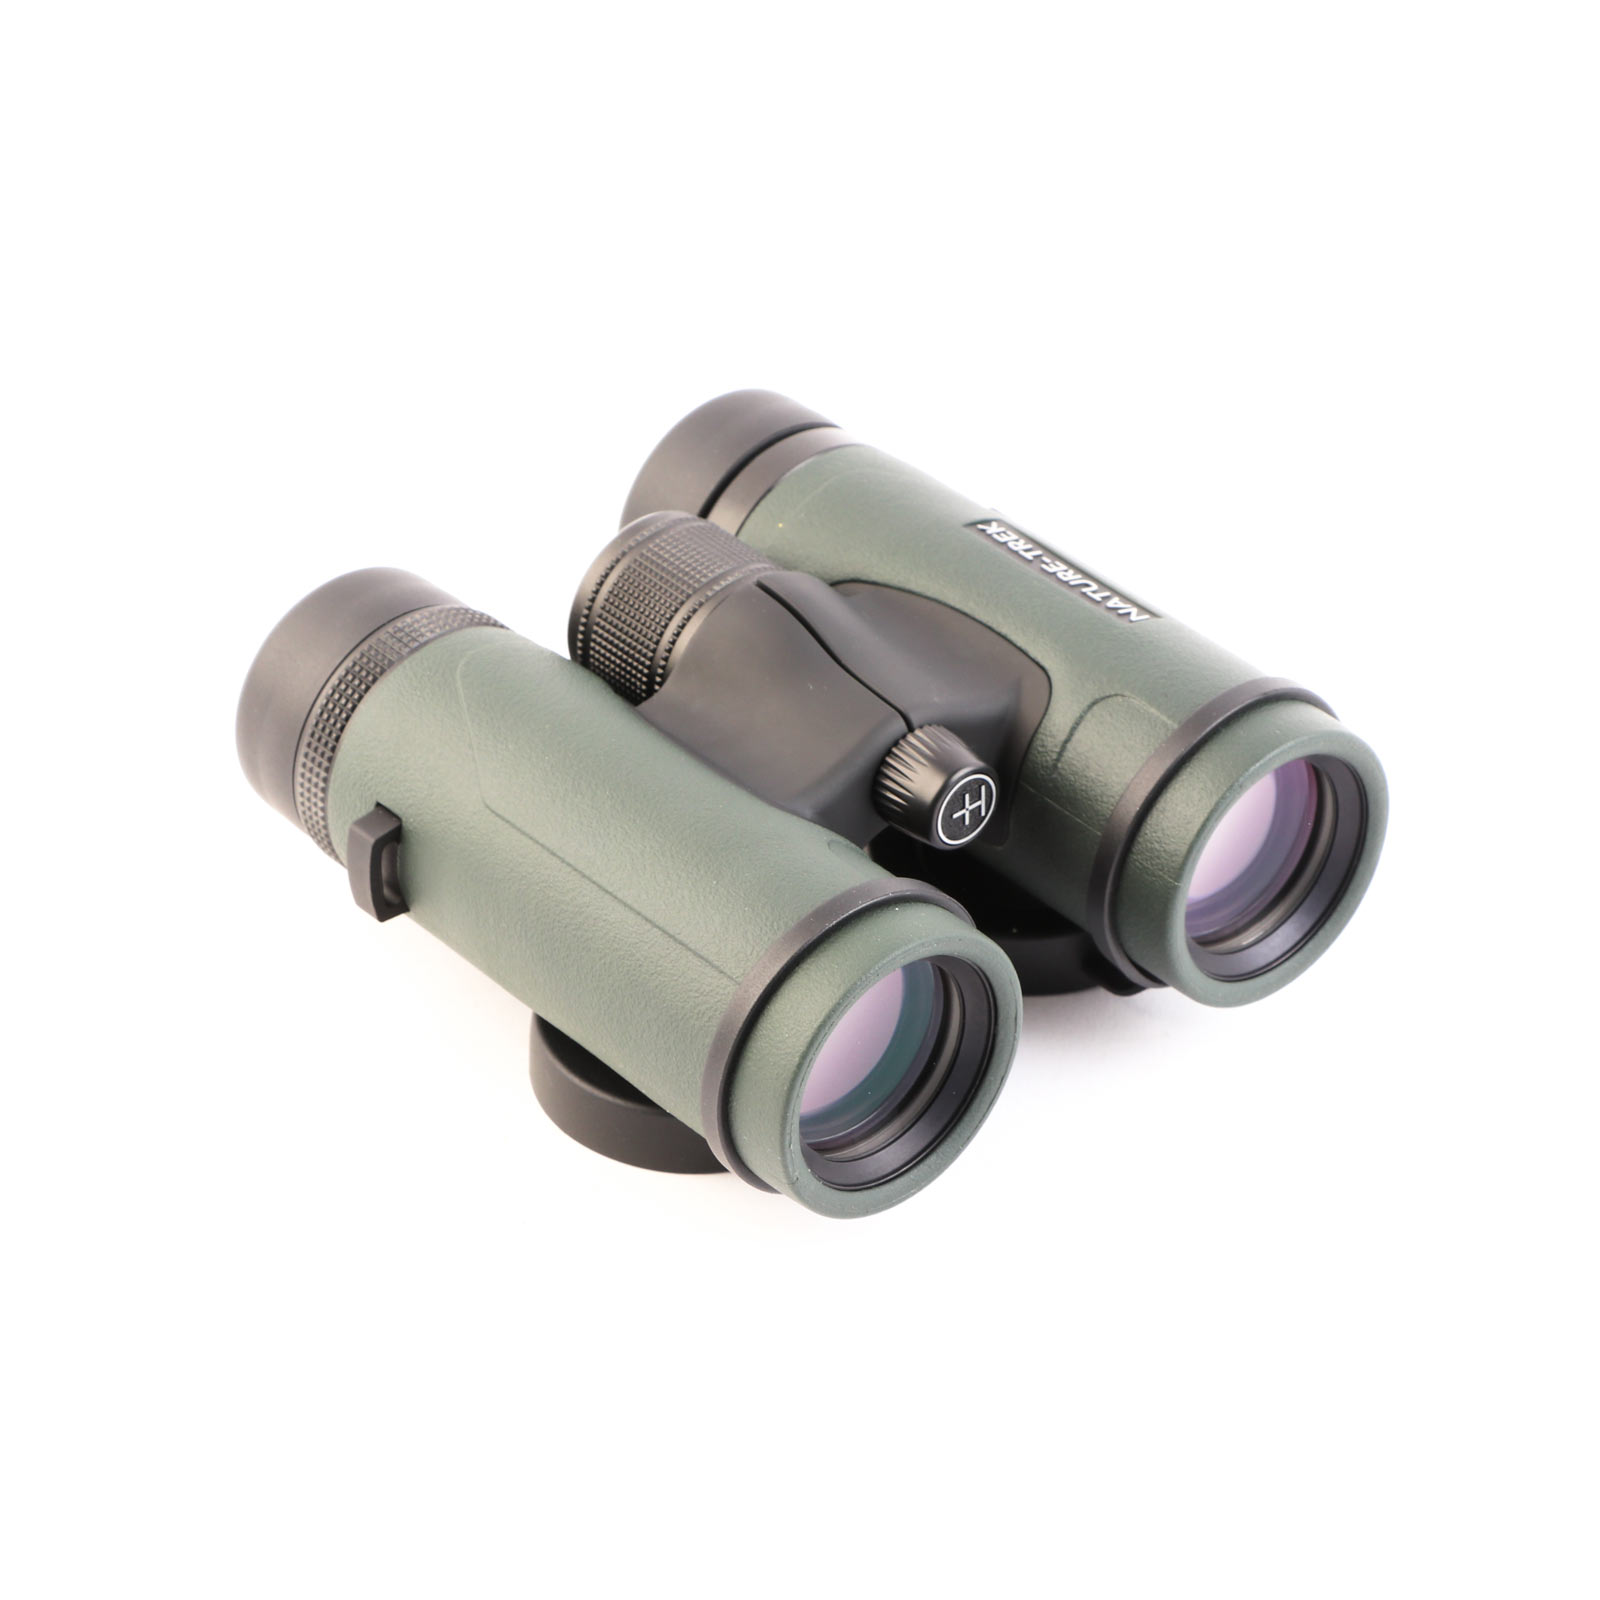 USED Hawke Nature-Trek 10x32 Binoculars